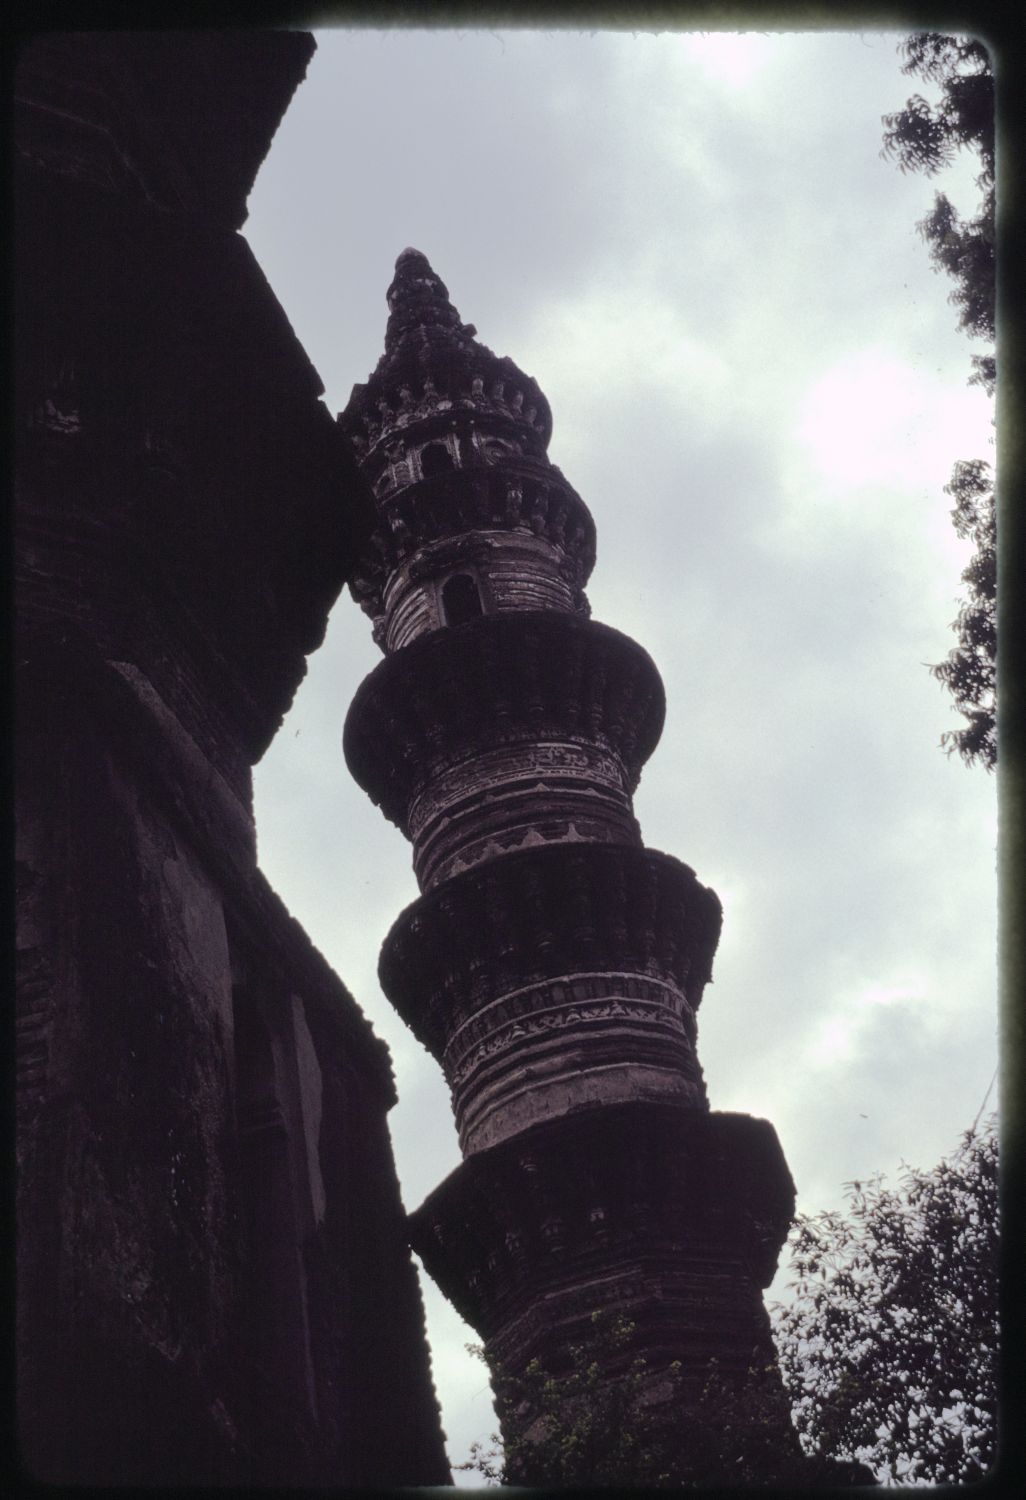 View of upper part of minaret.